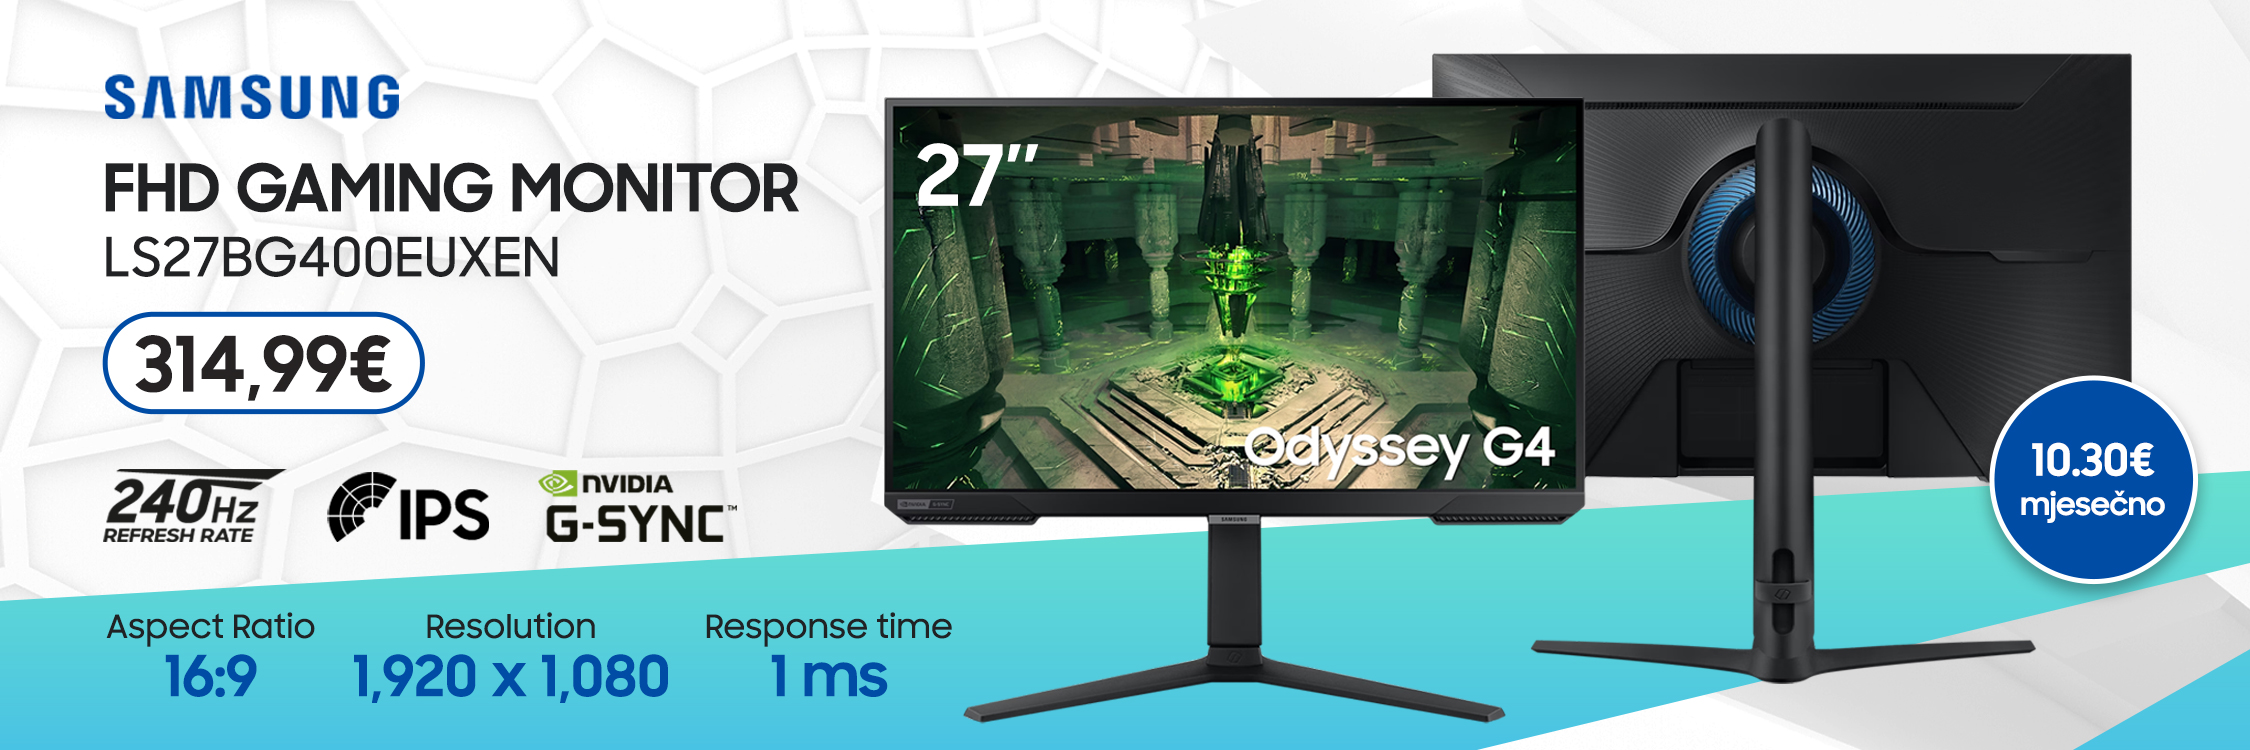 SAMSUNG Odyssey Gaming IPS Monitor G4